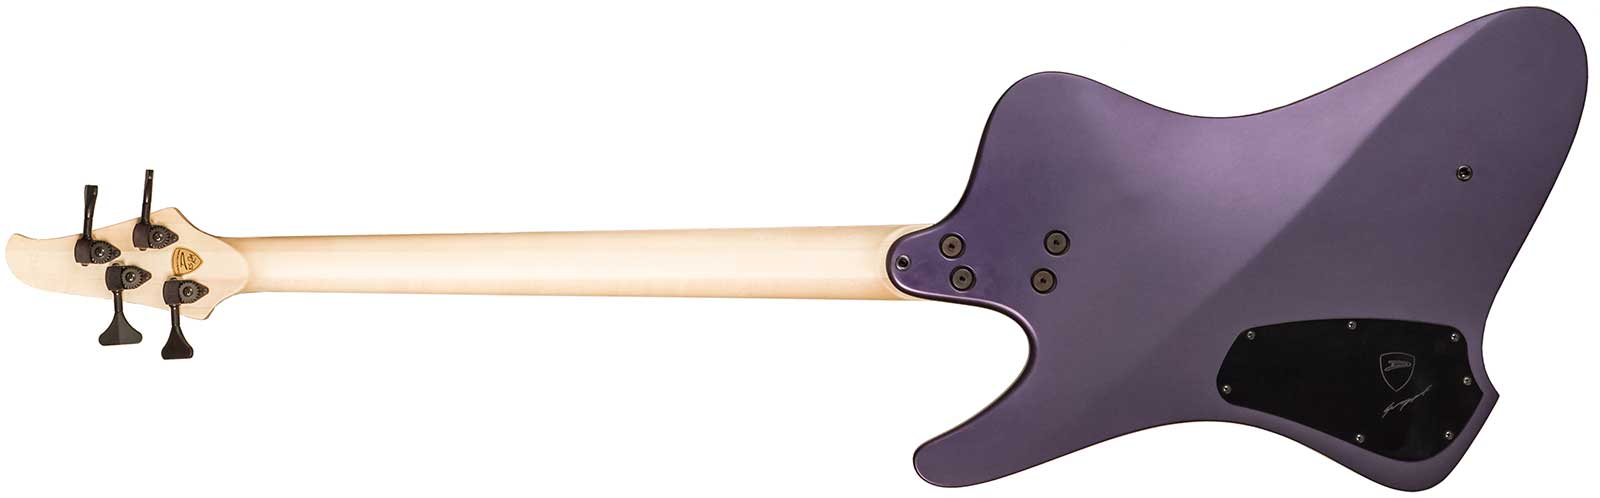 Dingwall Custom Shop D-roc 4c 3-pickups Wen #6982 - Purple To Faded Black - Solidbody E-bass - Variation 1